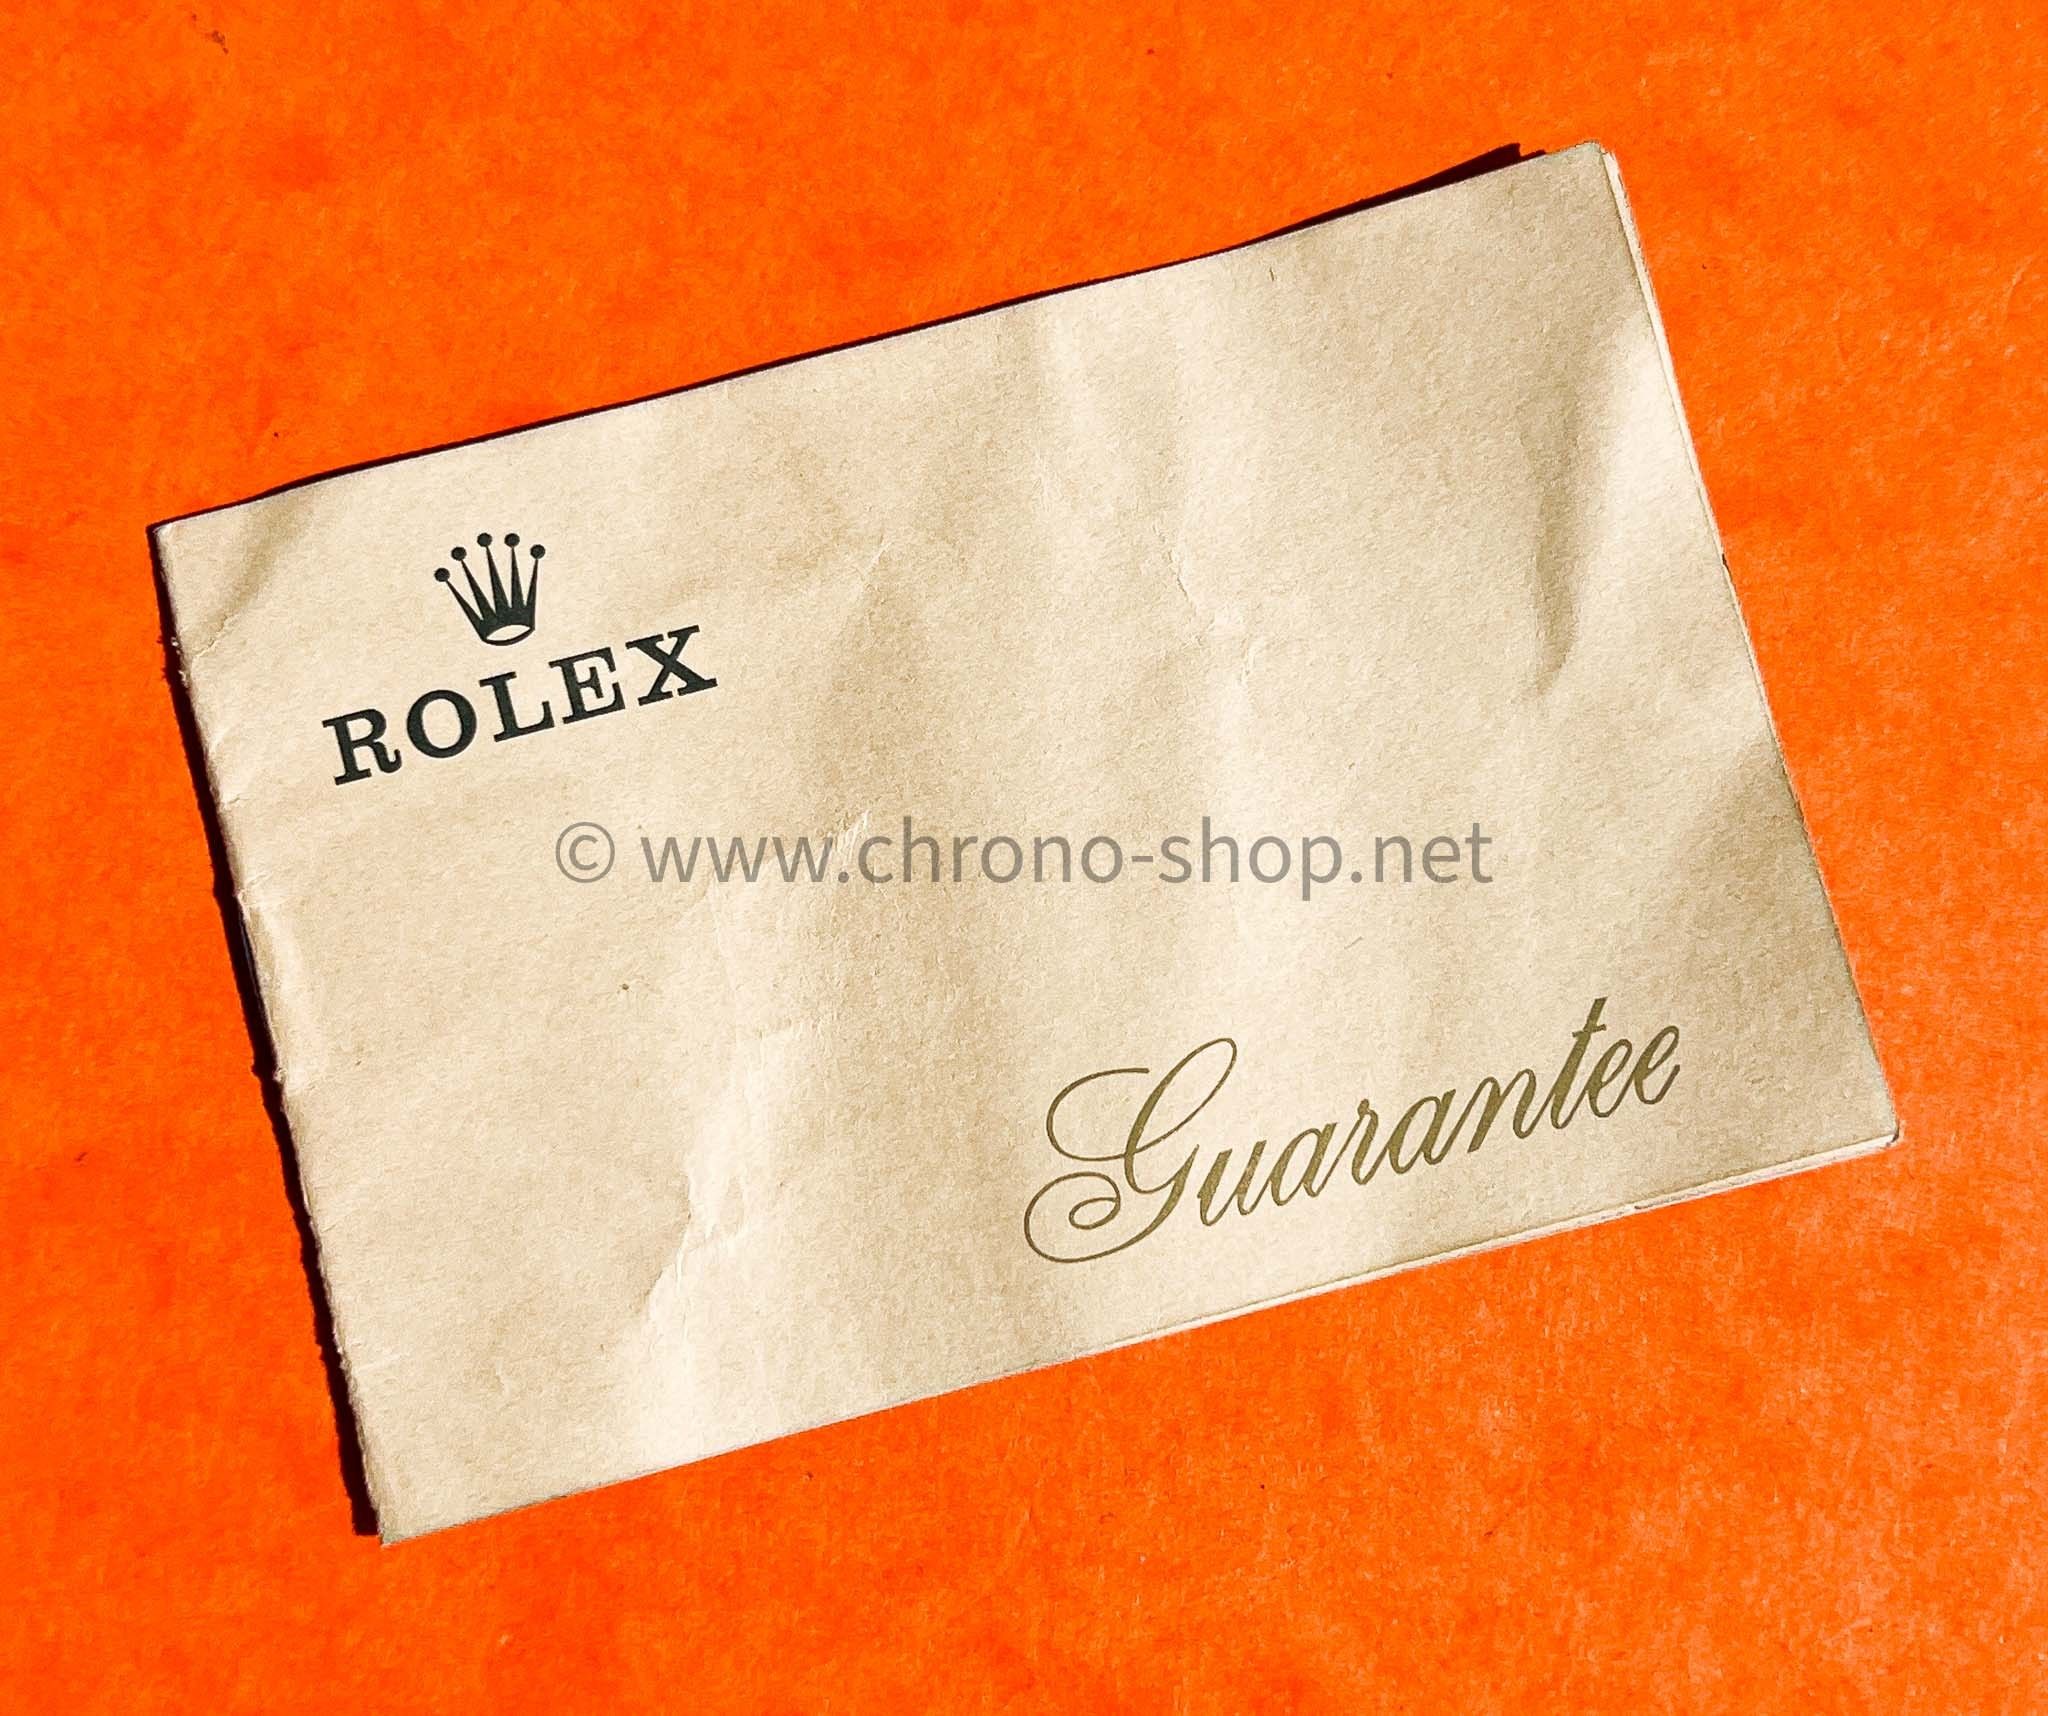 Rolex Blank 1971 Warranty Paper guarantee booklet ref 11.618-573.02-971-100 Submariner 1680,5513,5512 Daytona 6263,6262,6239